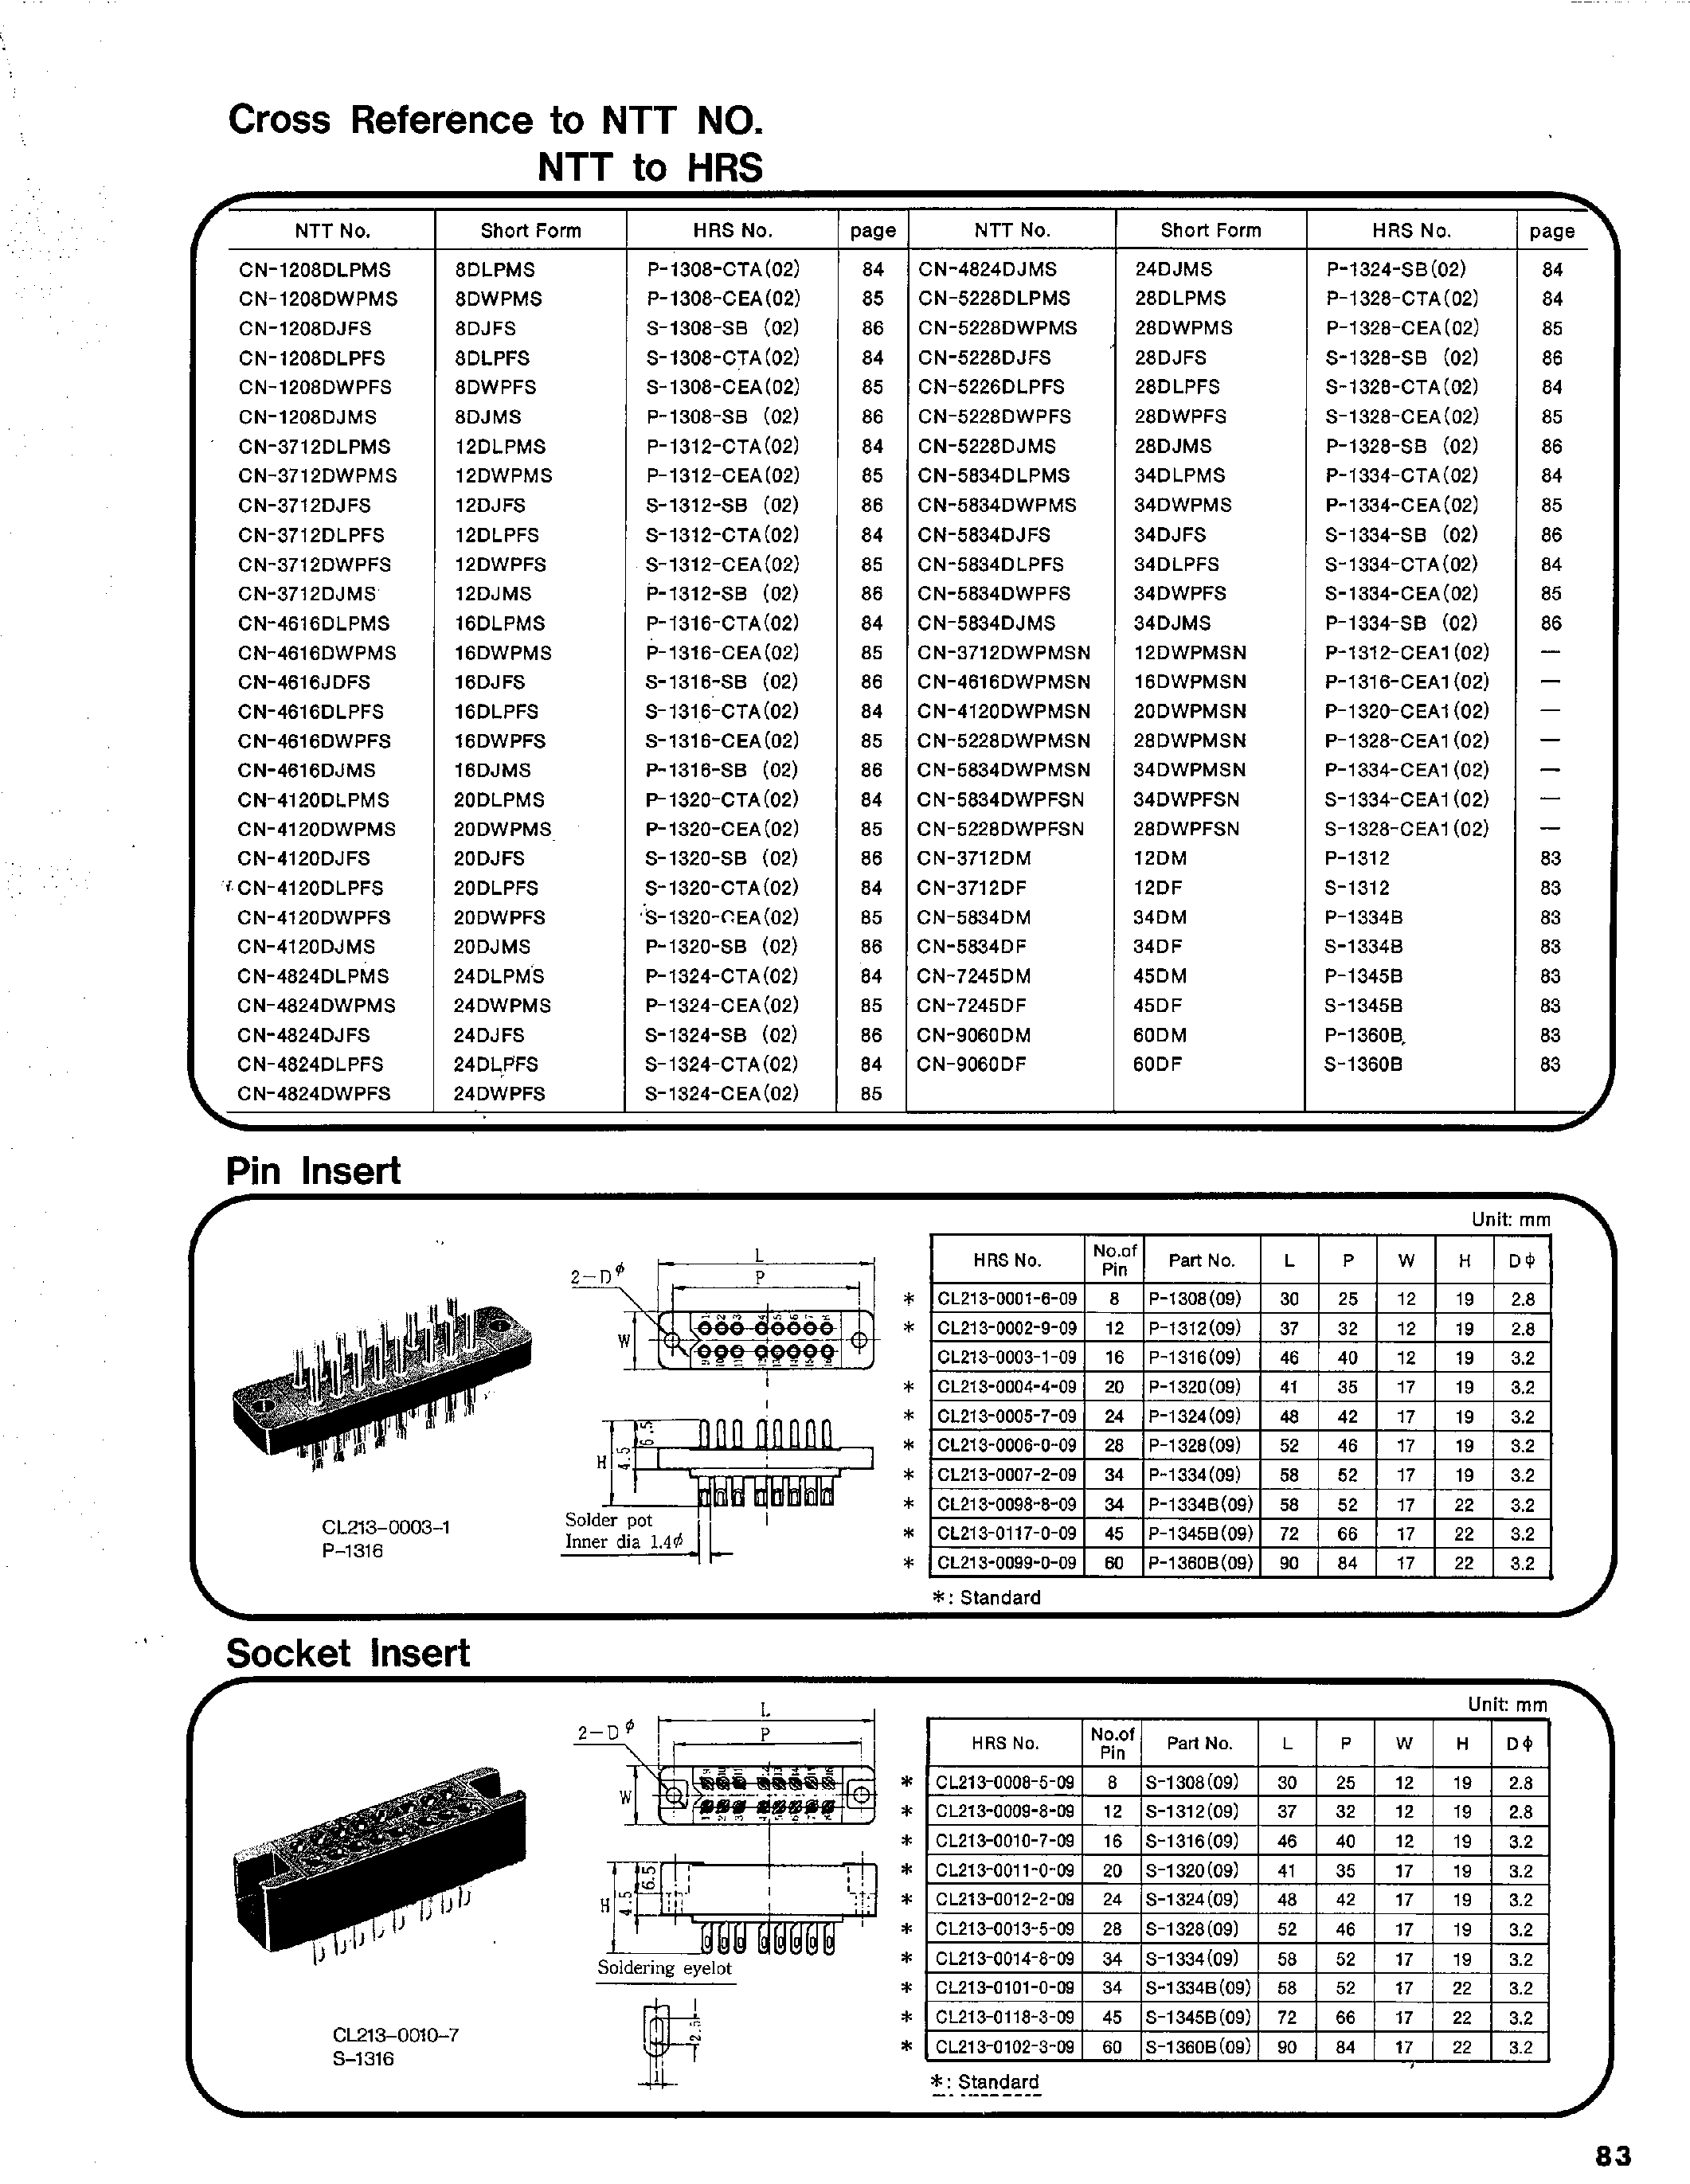 Datasheet P-1334-H - 1300 SERIES RECTANGULAR CONNECTORS page 2